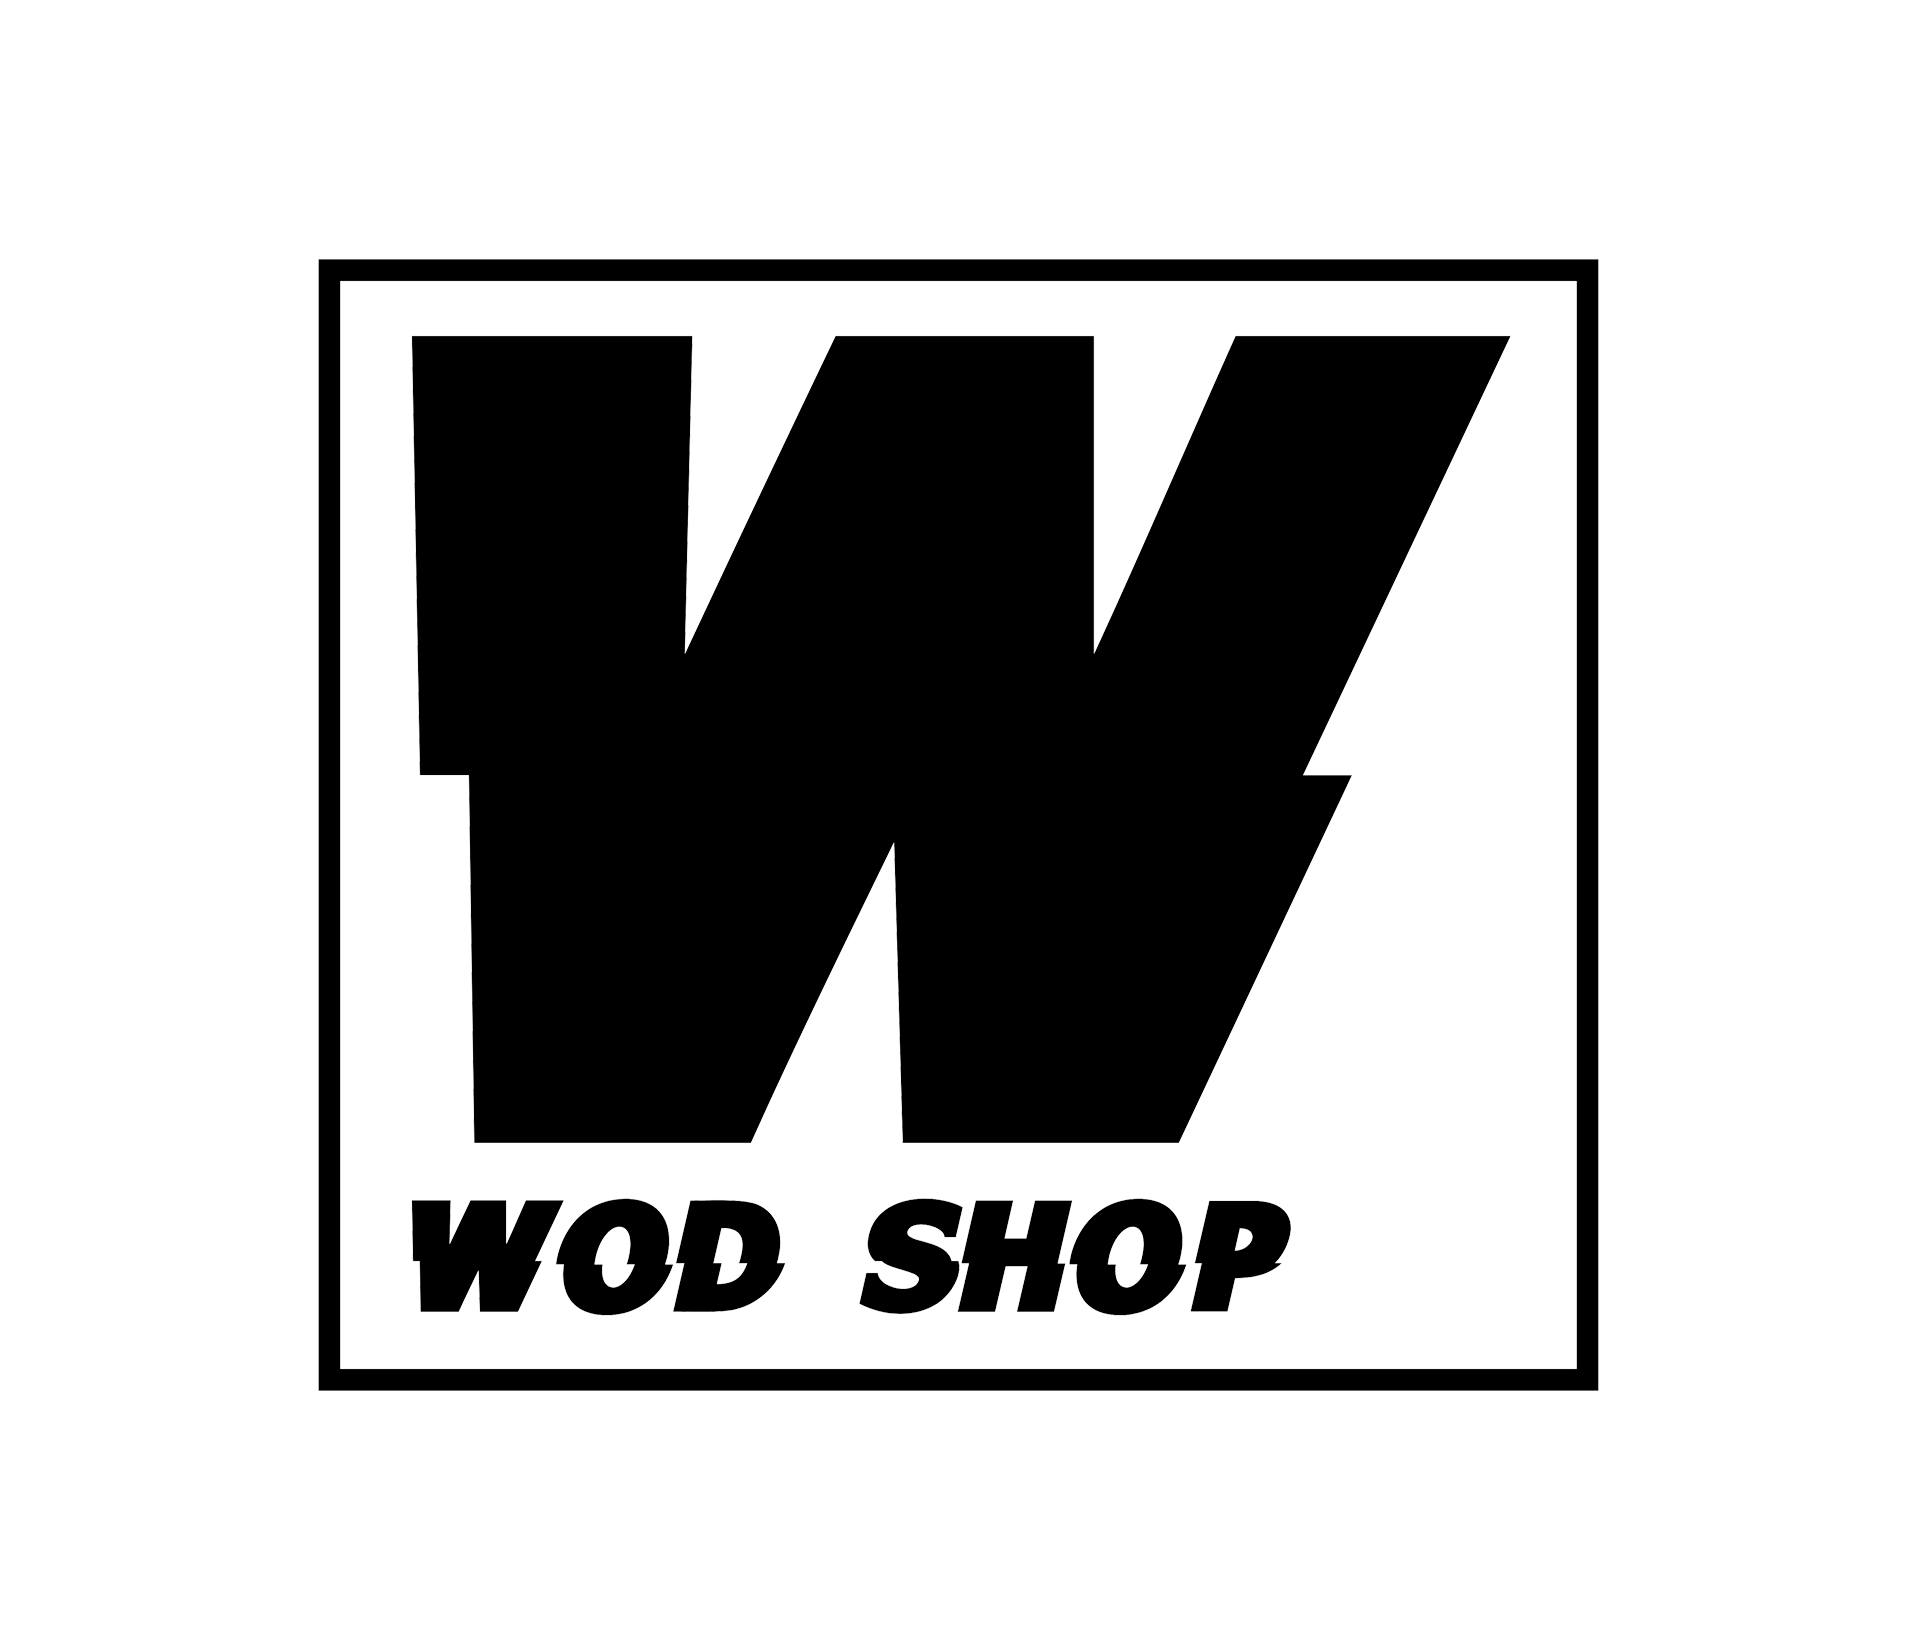 wod_shop.png